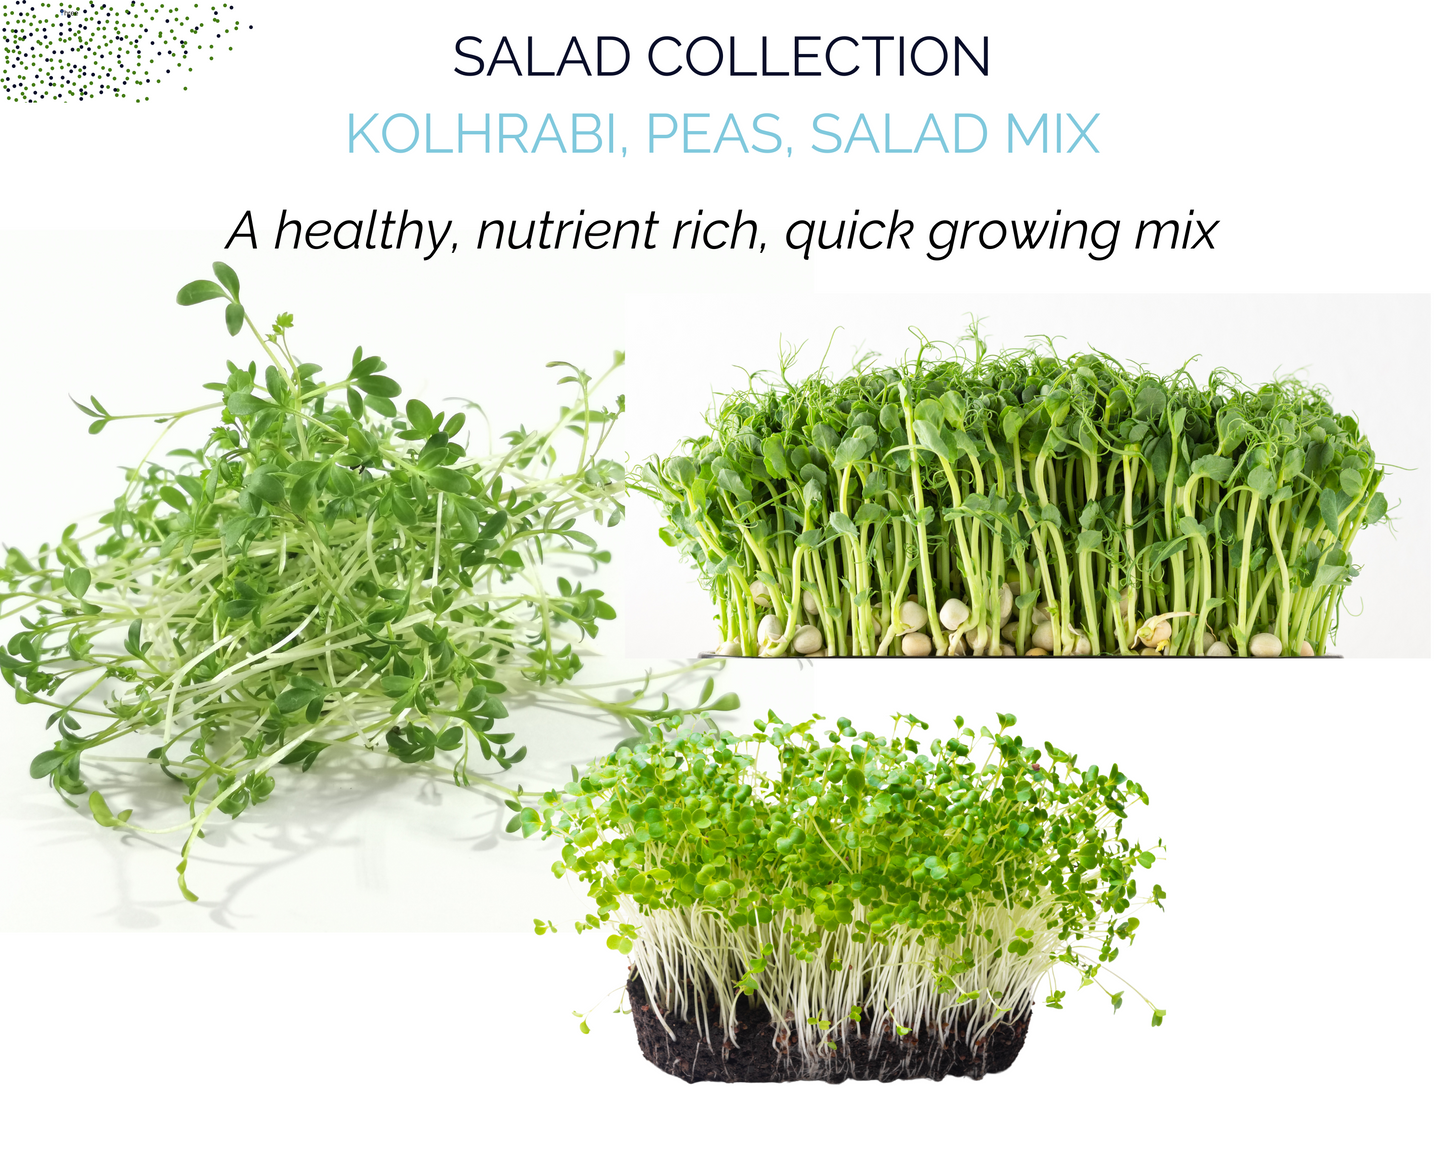 Organic Microgreens Container Garden Kit